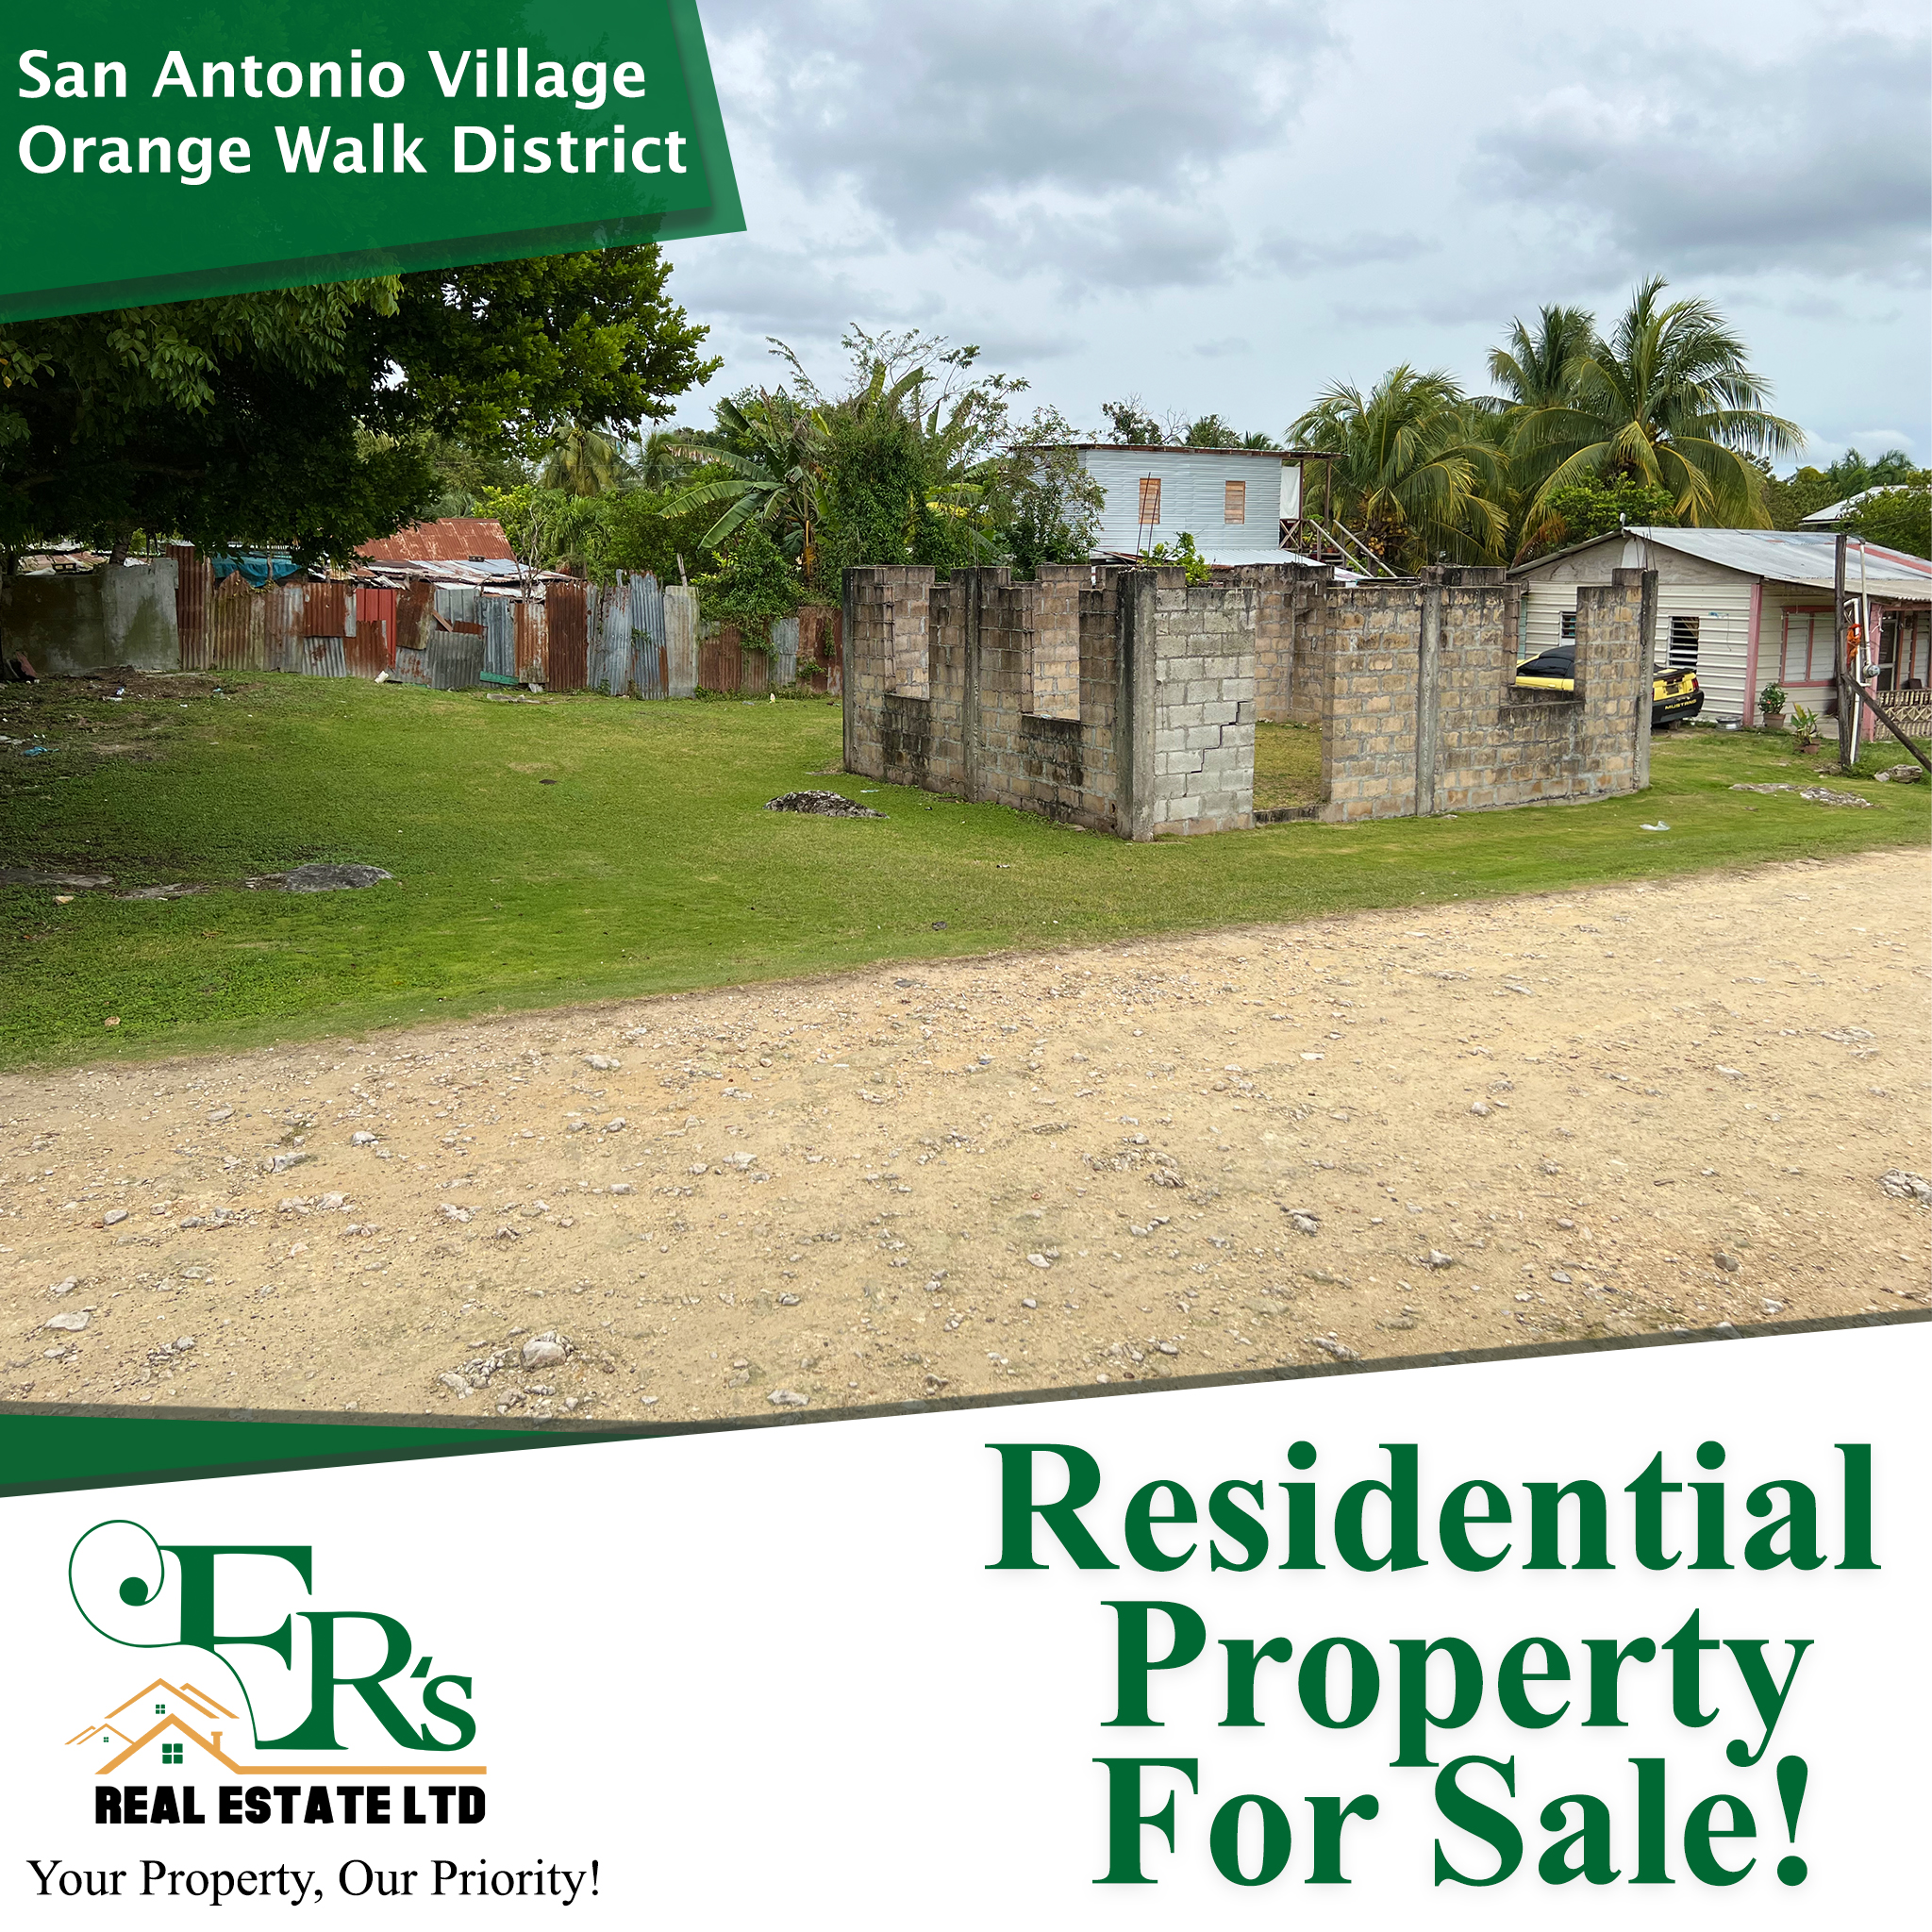 Residential Property in San Antonio Village, Orange Walk